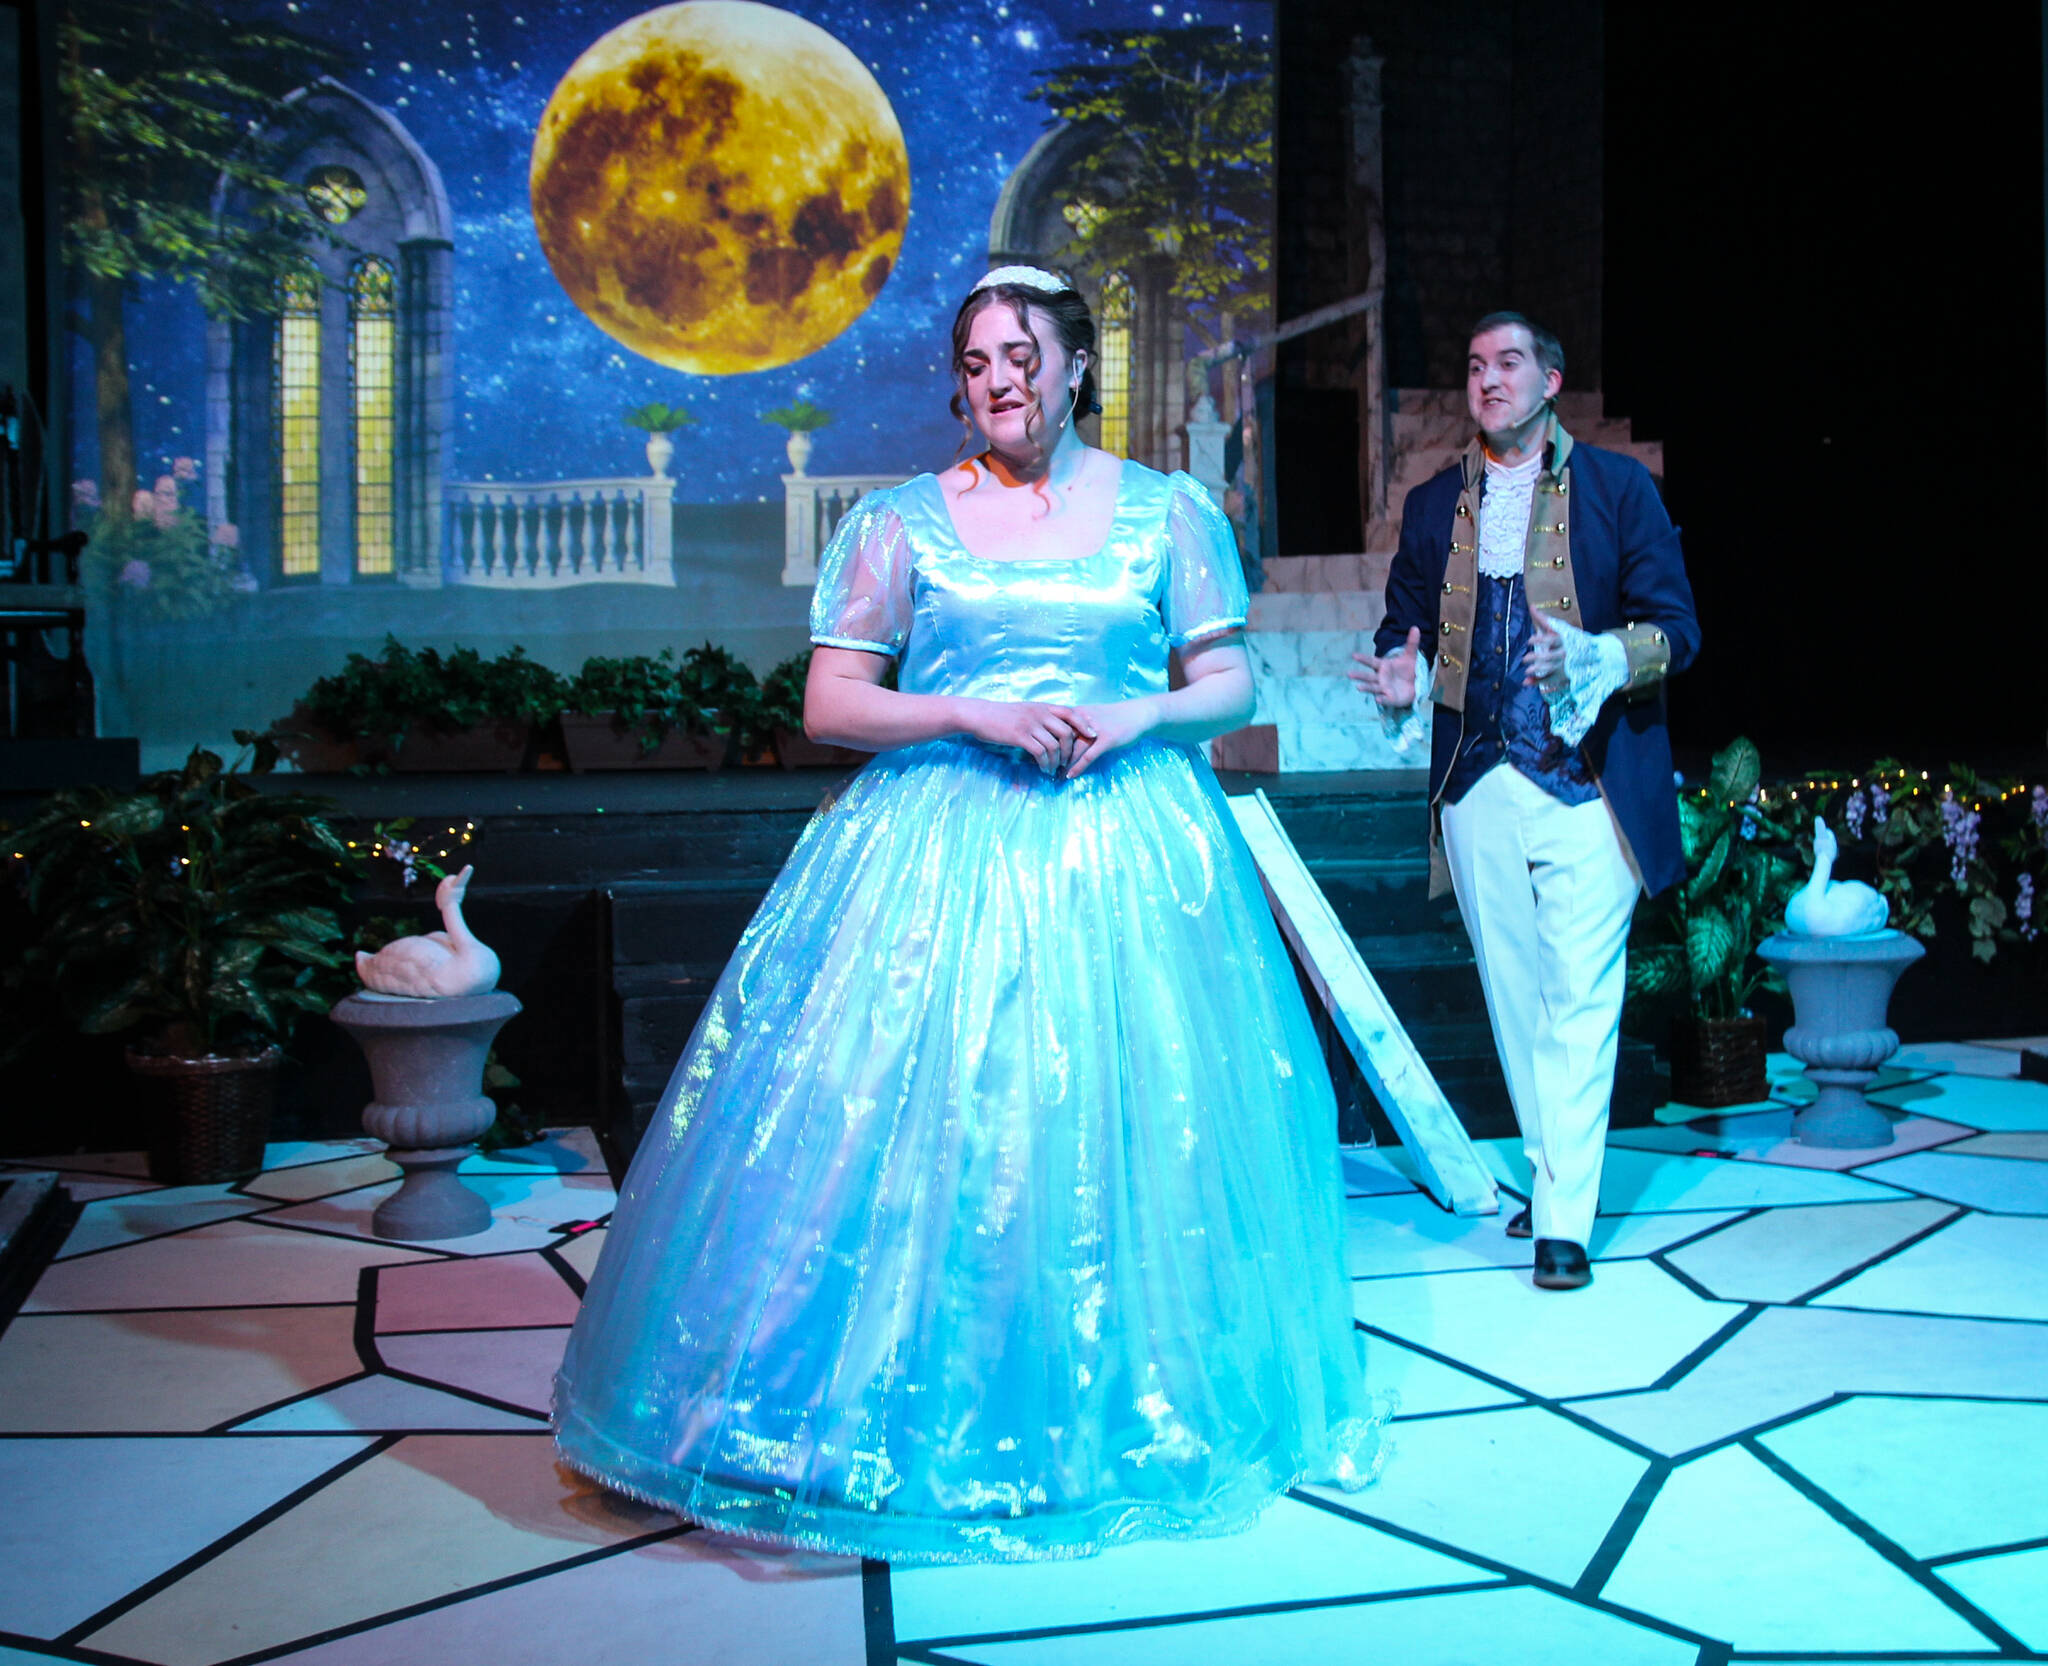 Cinderella (Gabrielle Eaton) talks with Prince Christopher (Jordan Kingma) in the royal gardens. (Photo by Luisa Loi)